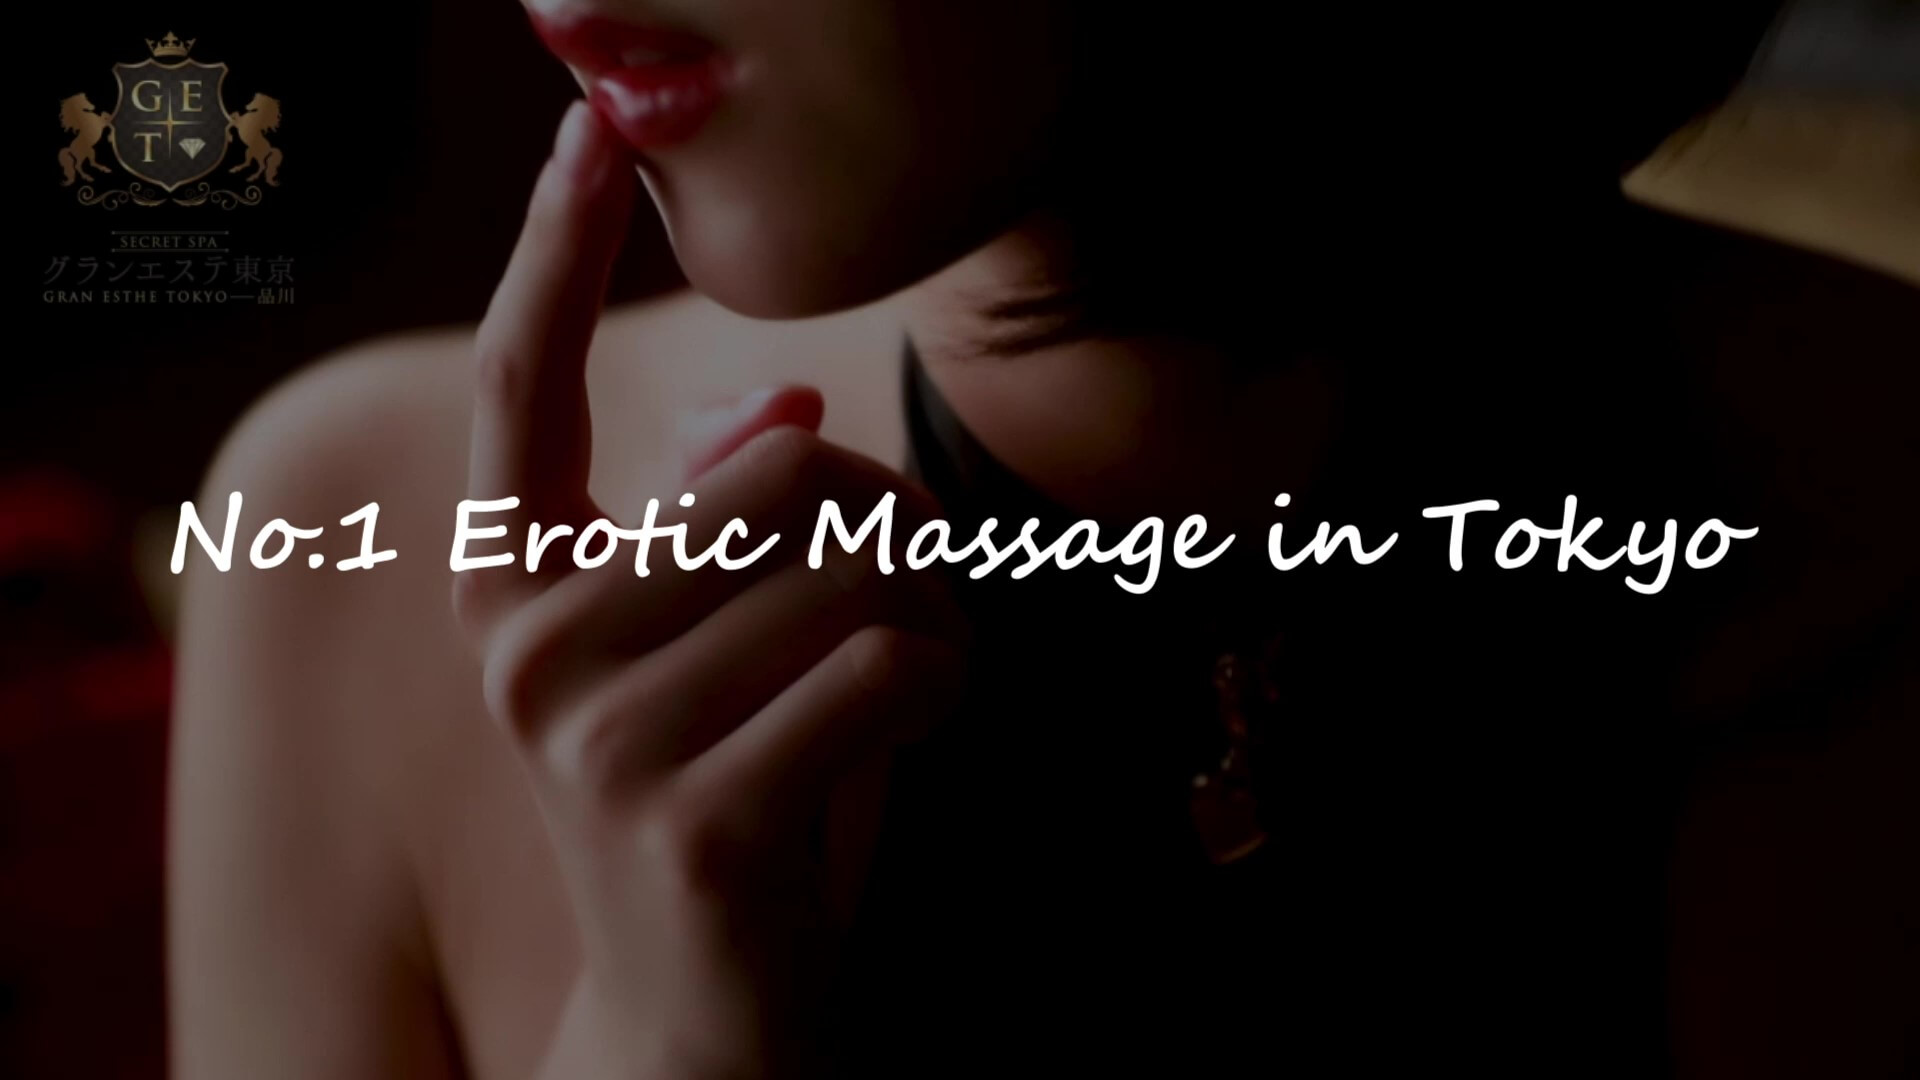 Gran Erotic Massage Tokyo Japanese Erotic, Nuru, Happyending Massage Services picture